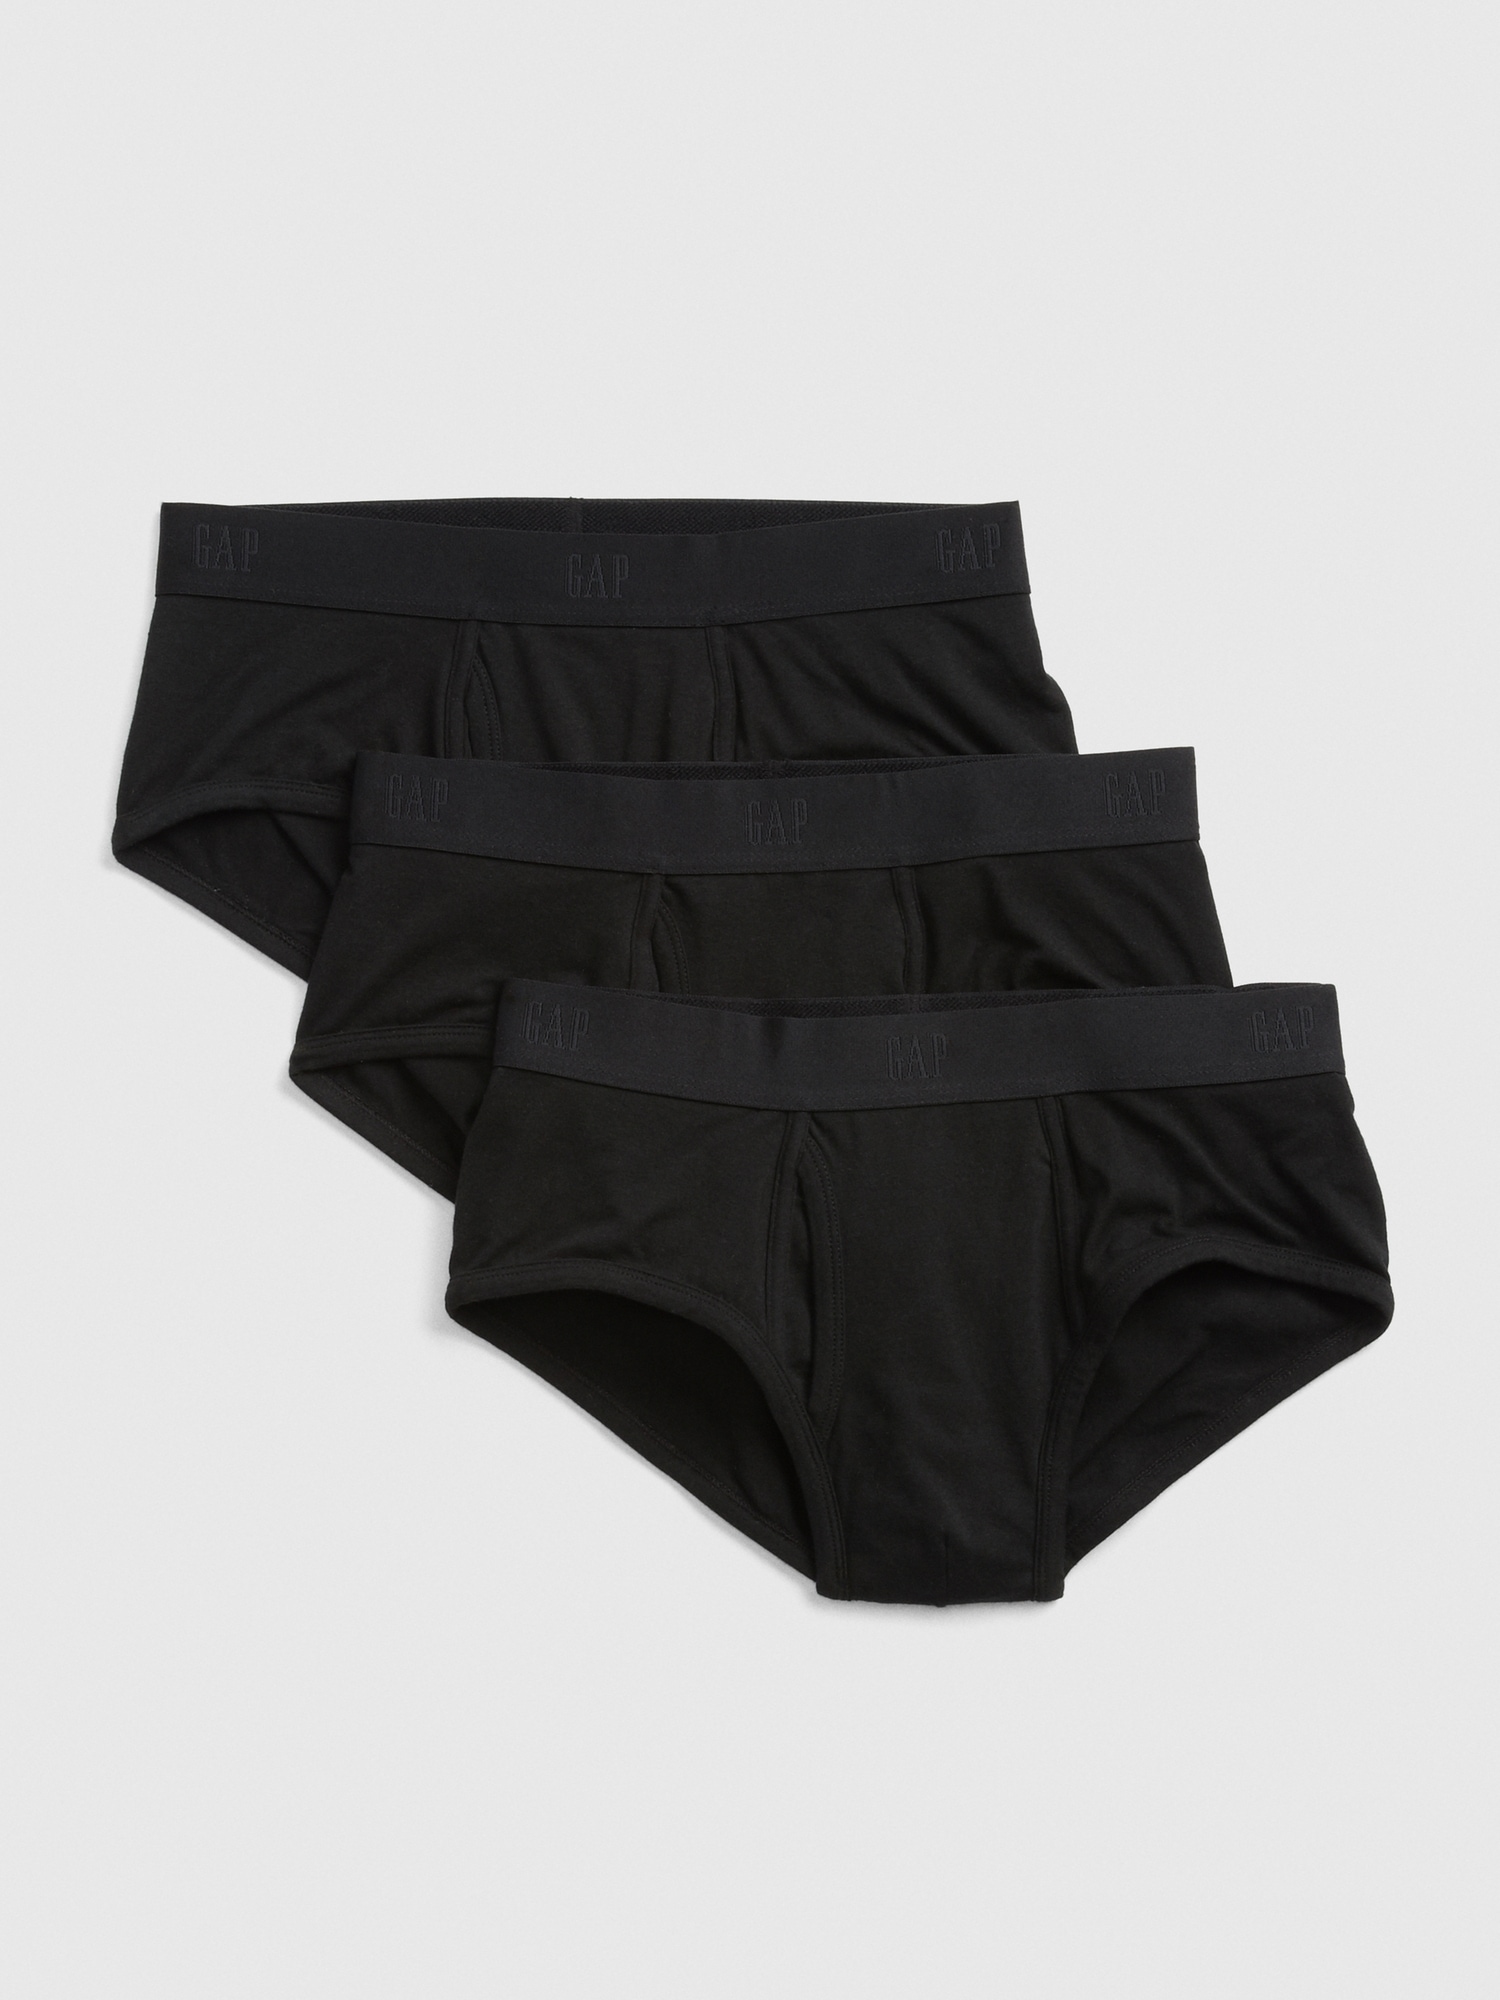 GAP Women's 3-Pack No Show Bikini Underpants Underwear, Multi, X-Small :  : Clothing, Shoes & Accessories